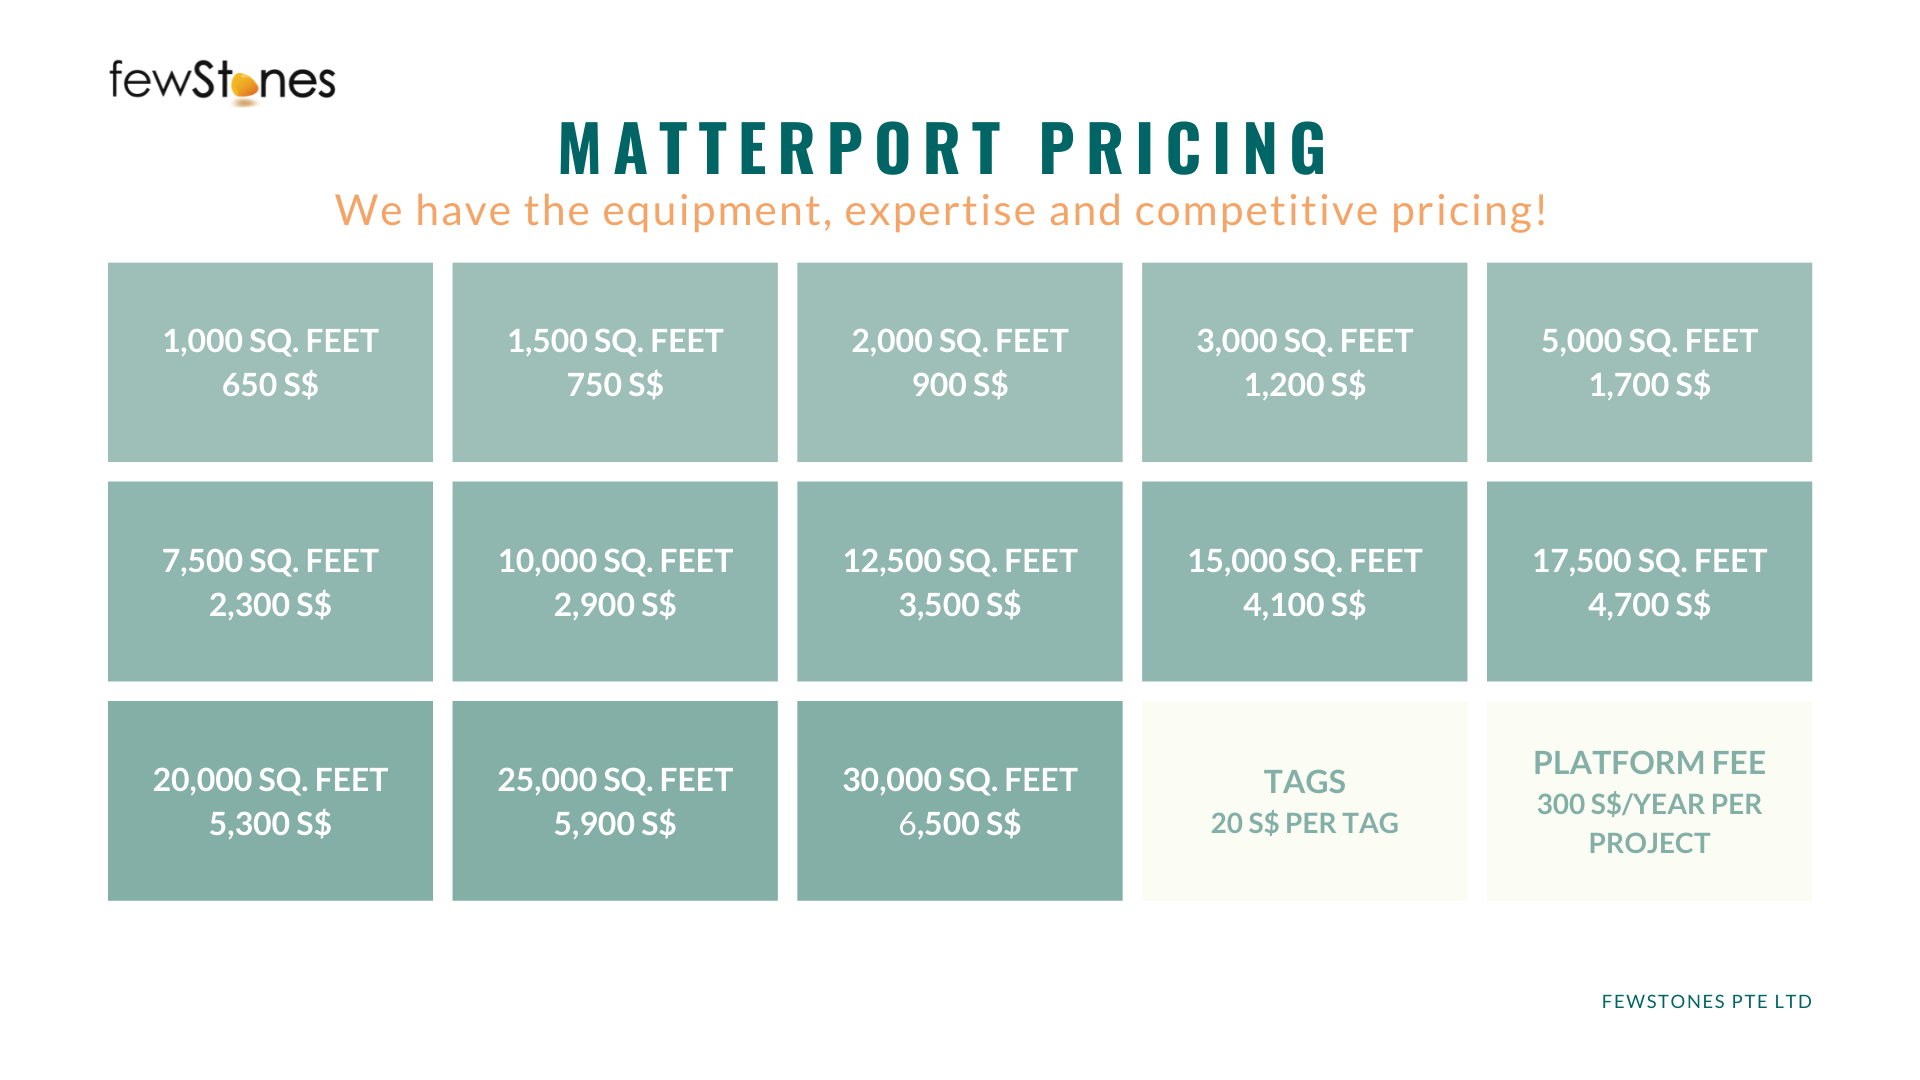 fewstones matterport pricing